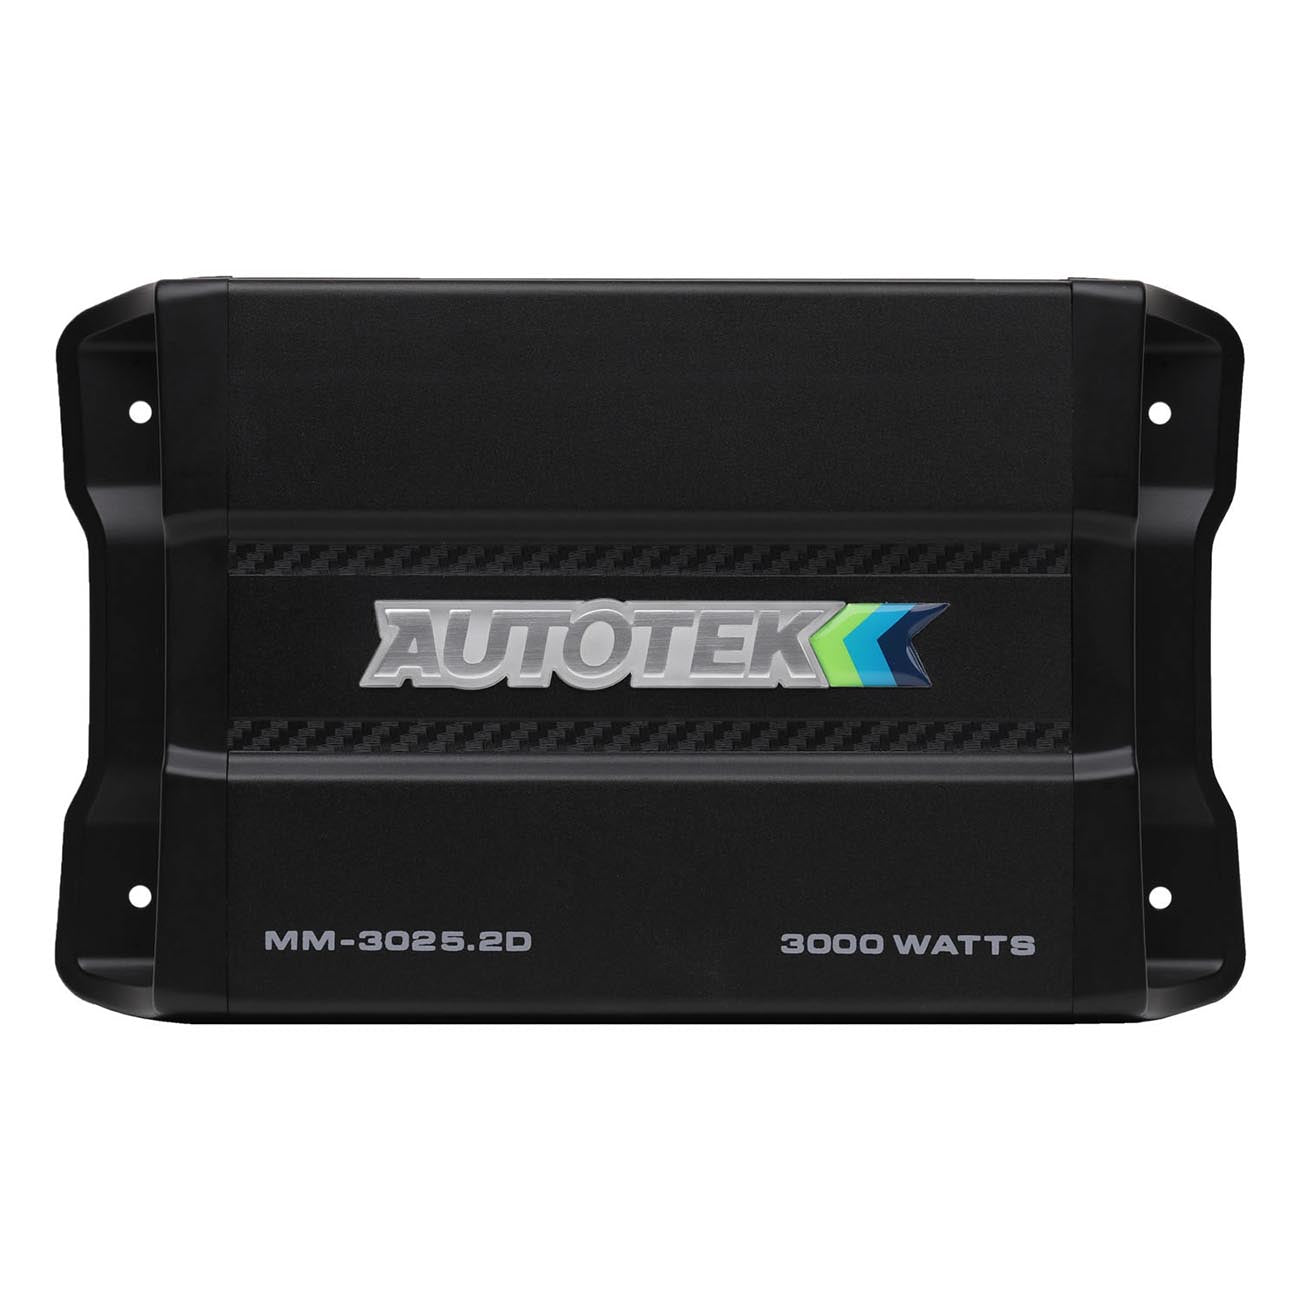 Autotek Mean Machine Compact D Class Amplifier 3000 Watts 2 Channel